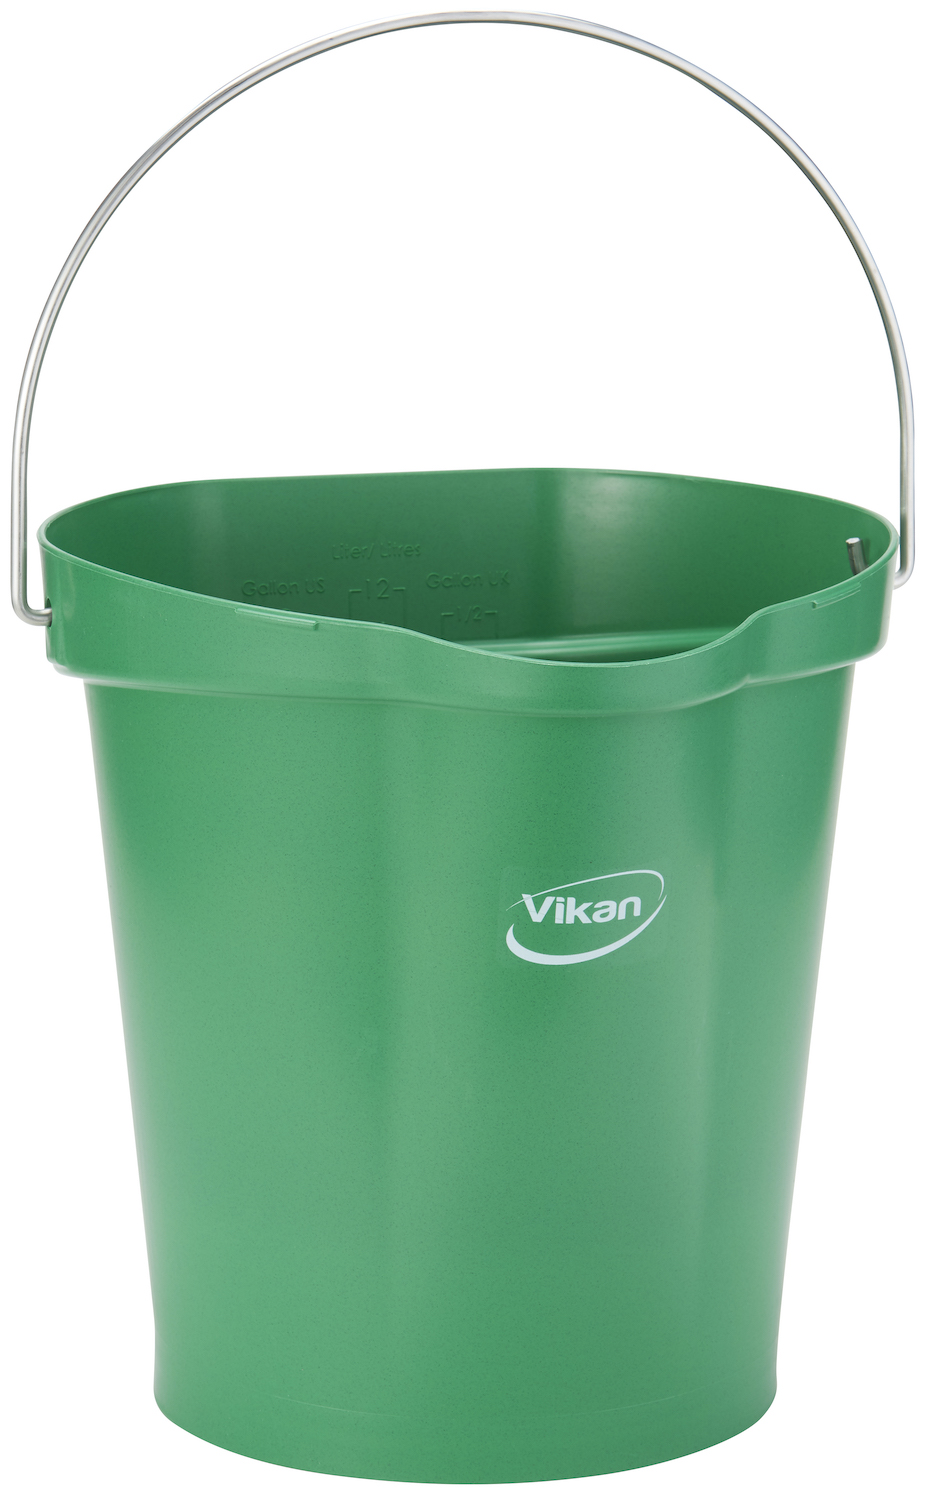 Vikan Bucket, Metal Detectable, 12 Litre, Green